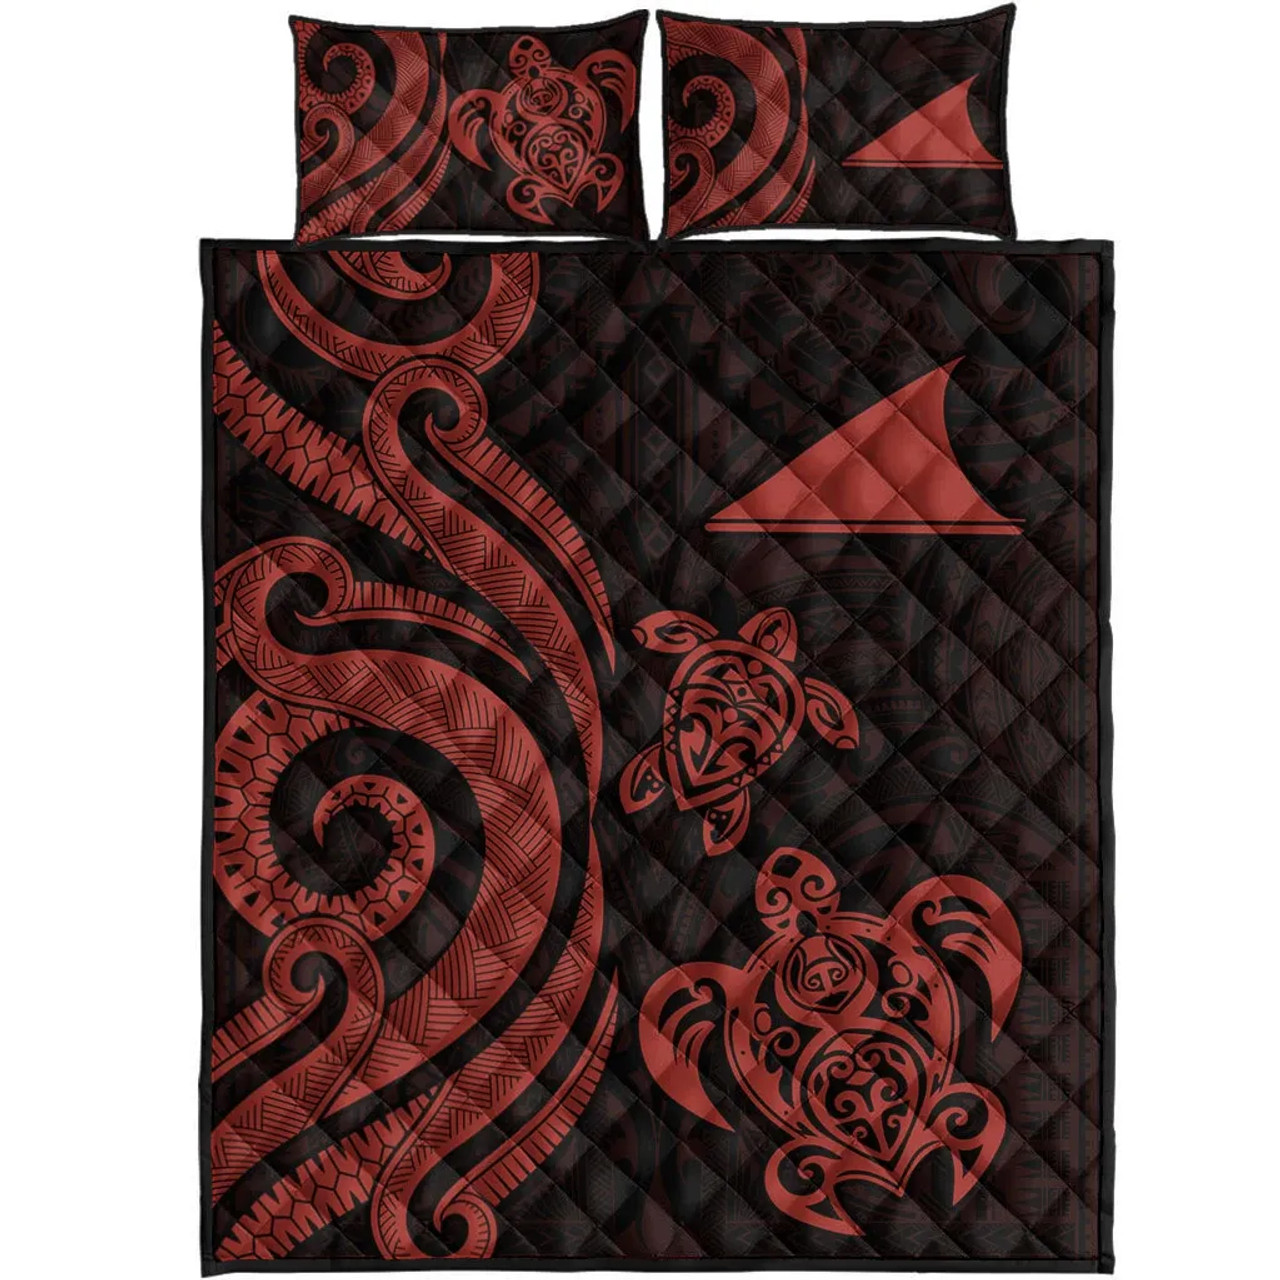 Tokelau Quilt Bed Set - Red Tentacle Turtle 5